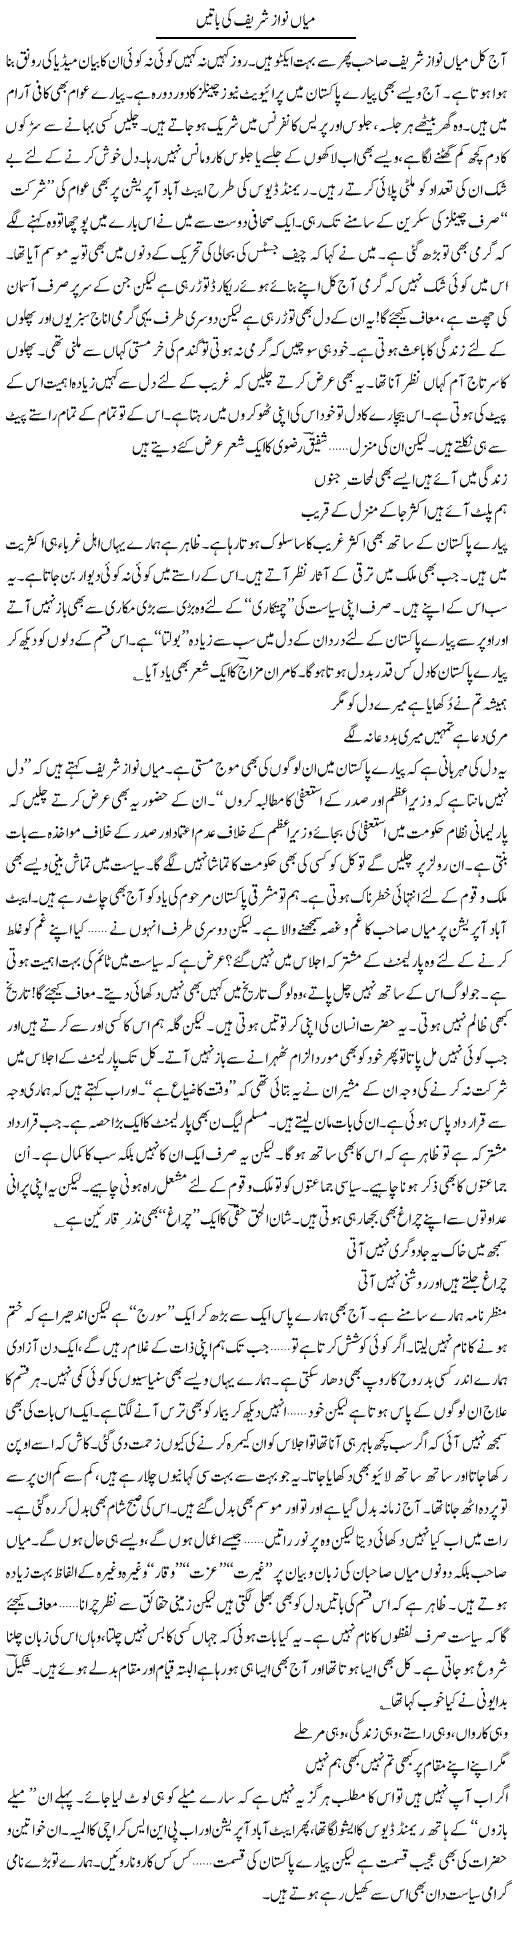 Nawaz Sharif Express Column Ijaz Hafeez 27 May 2011